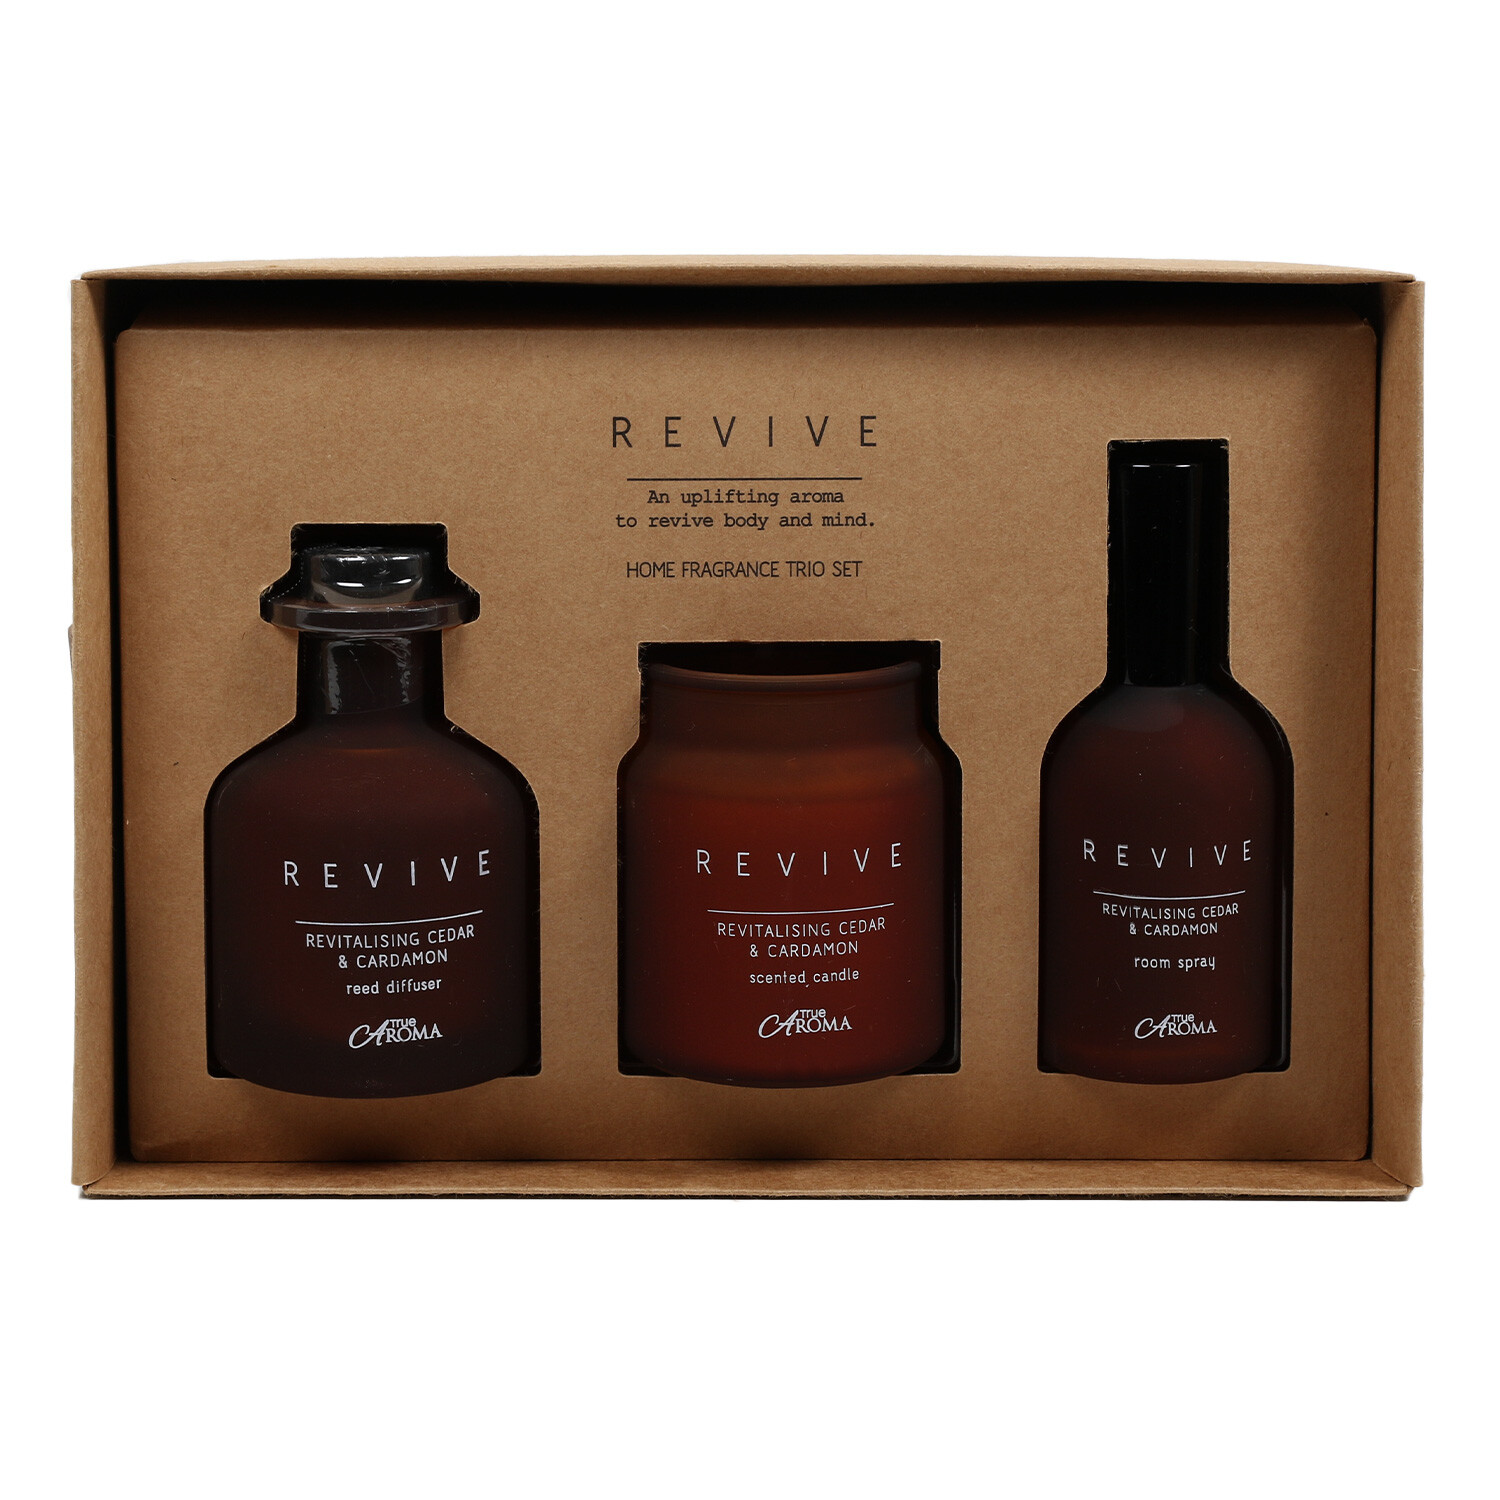 Revive Home Fragrance Gift Set - Brown Image 1